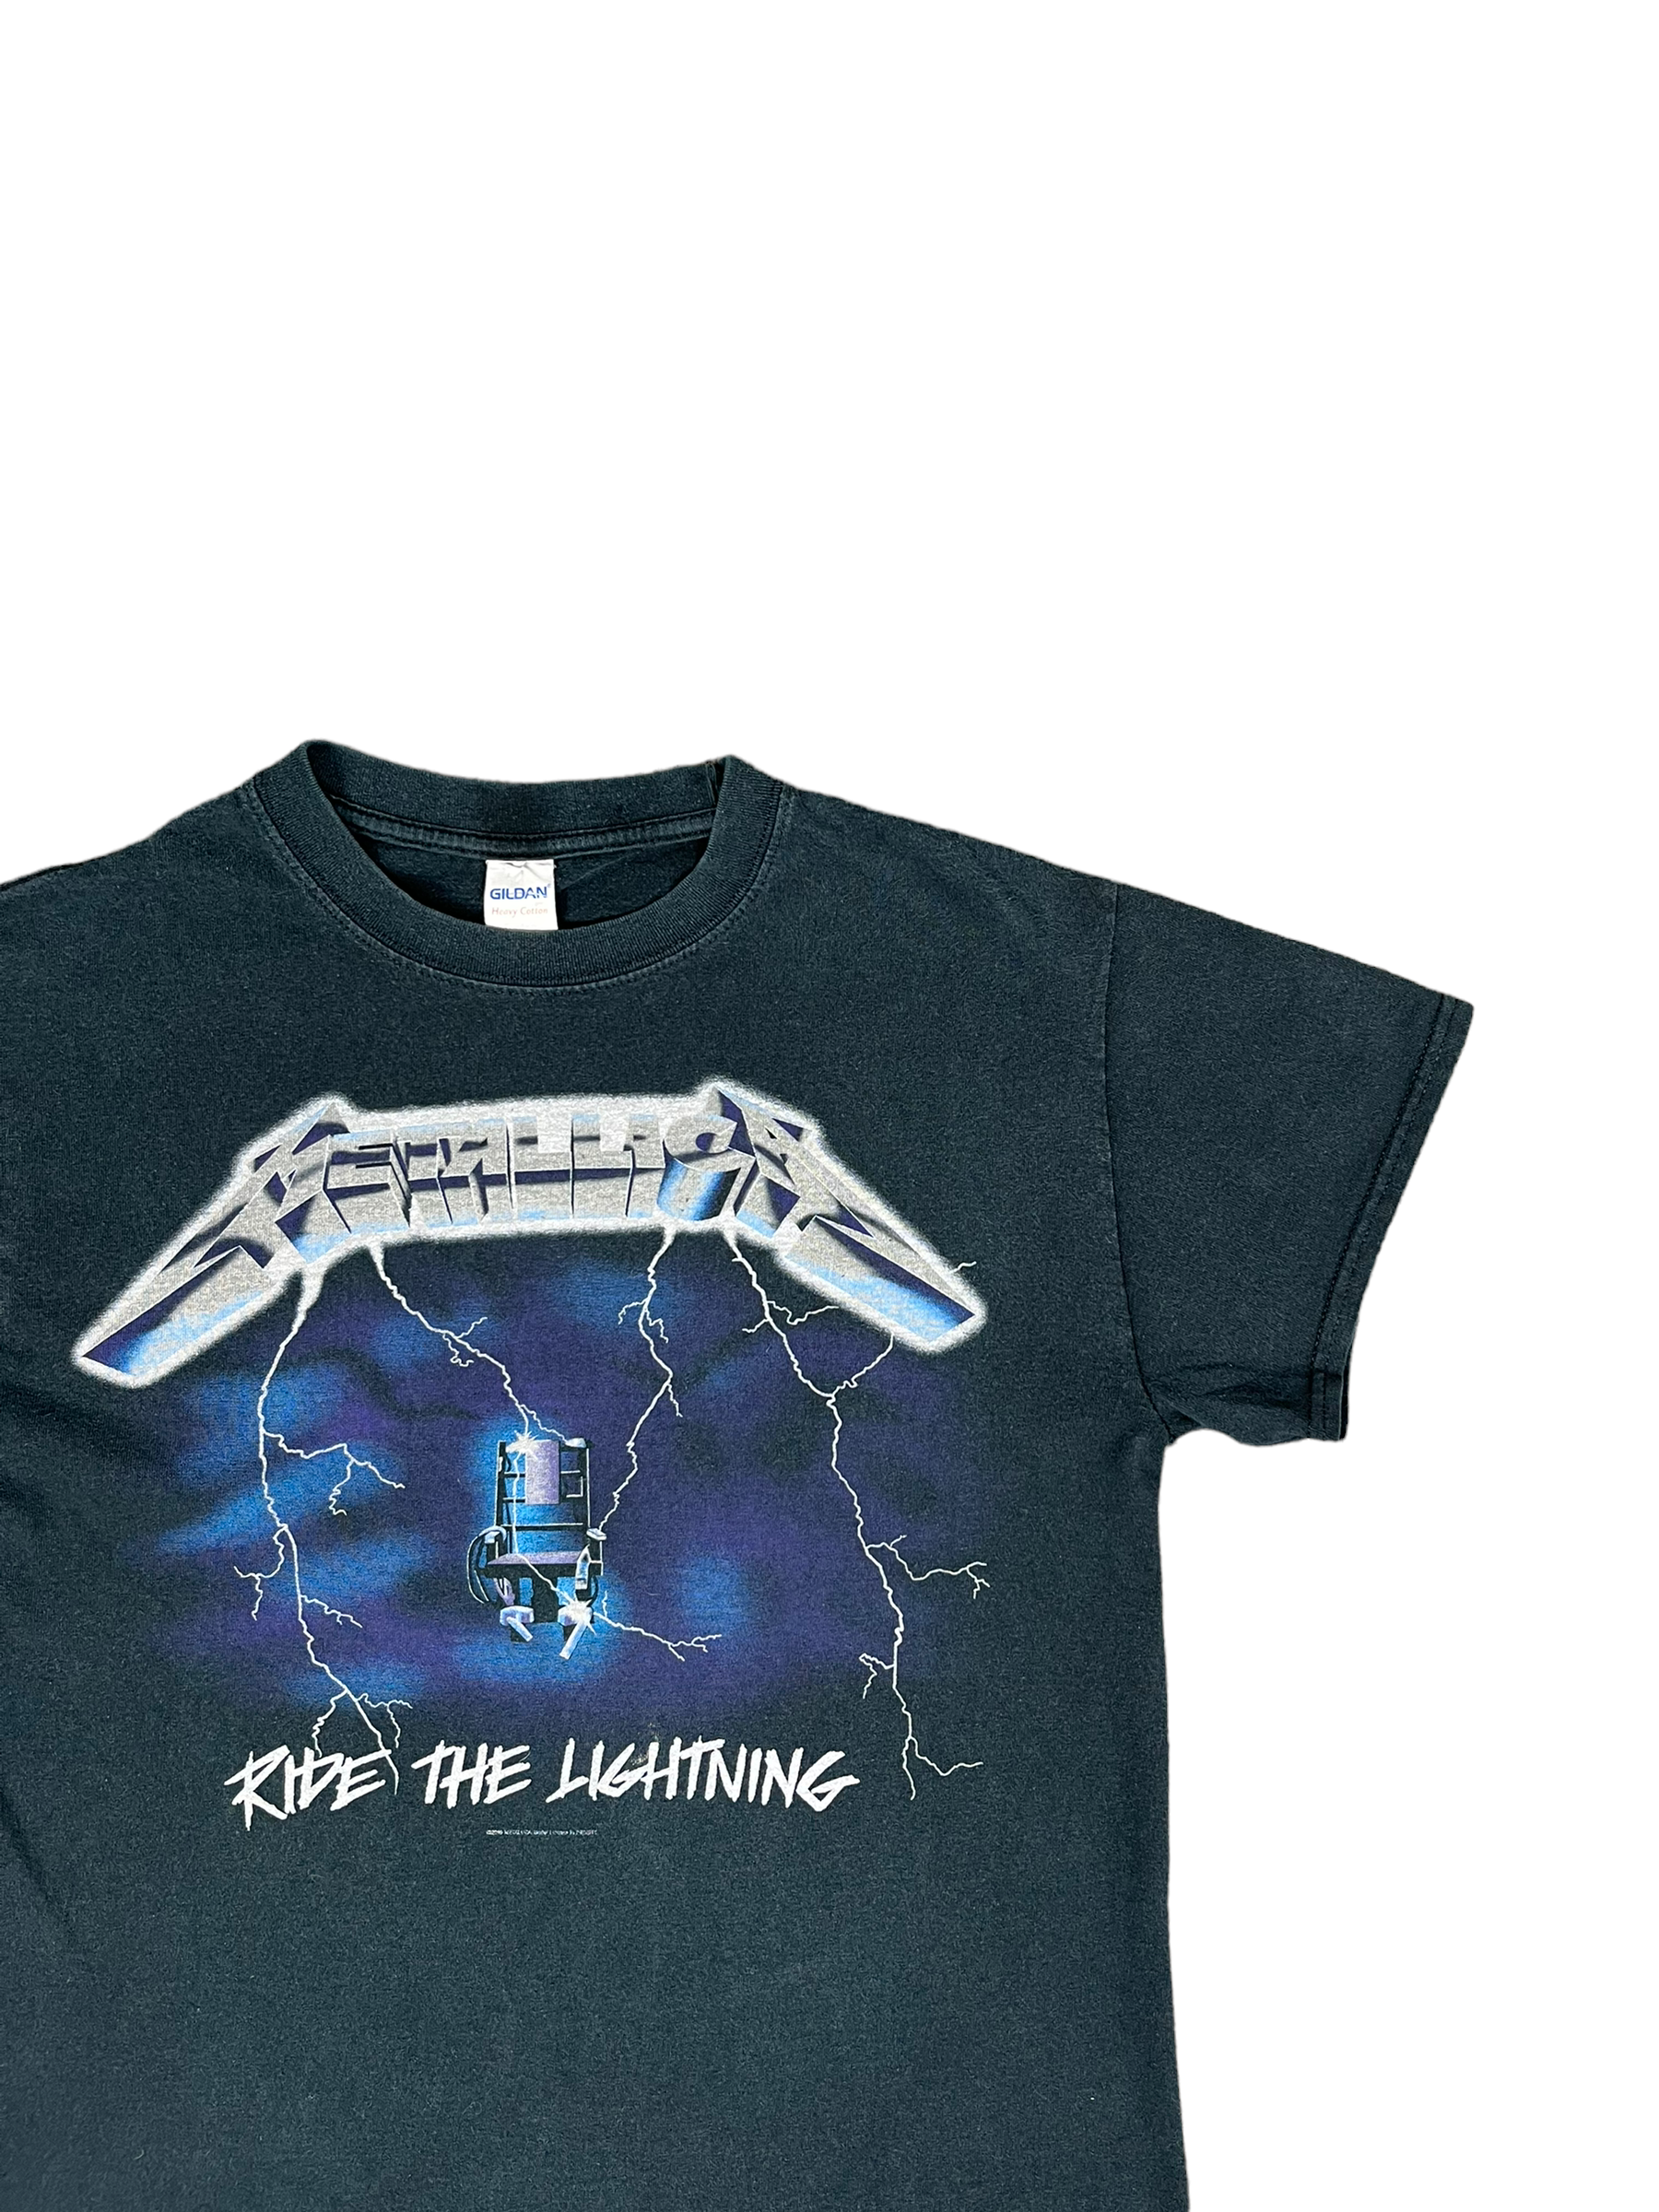 Metallica Ride The Lightning T Shirt Black - Small – Goose Vintage